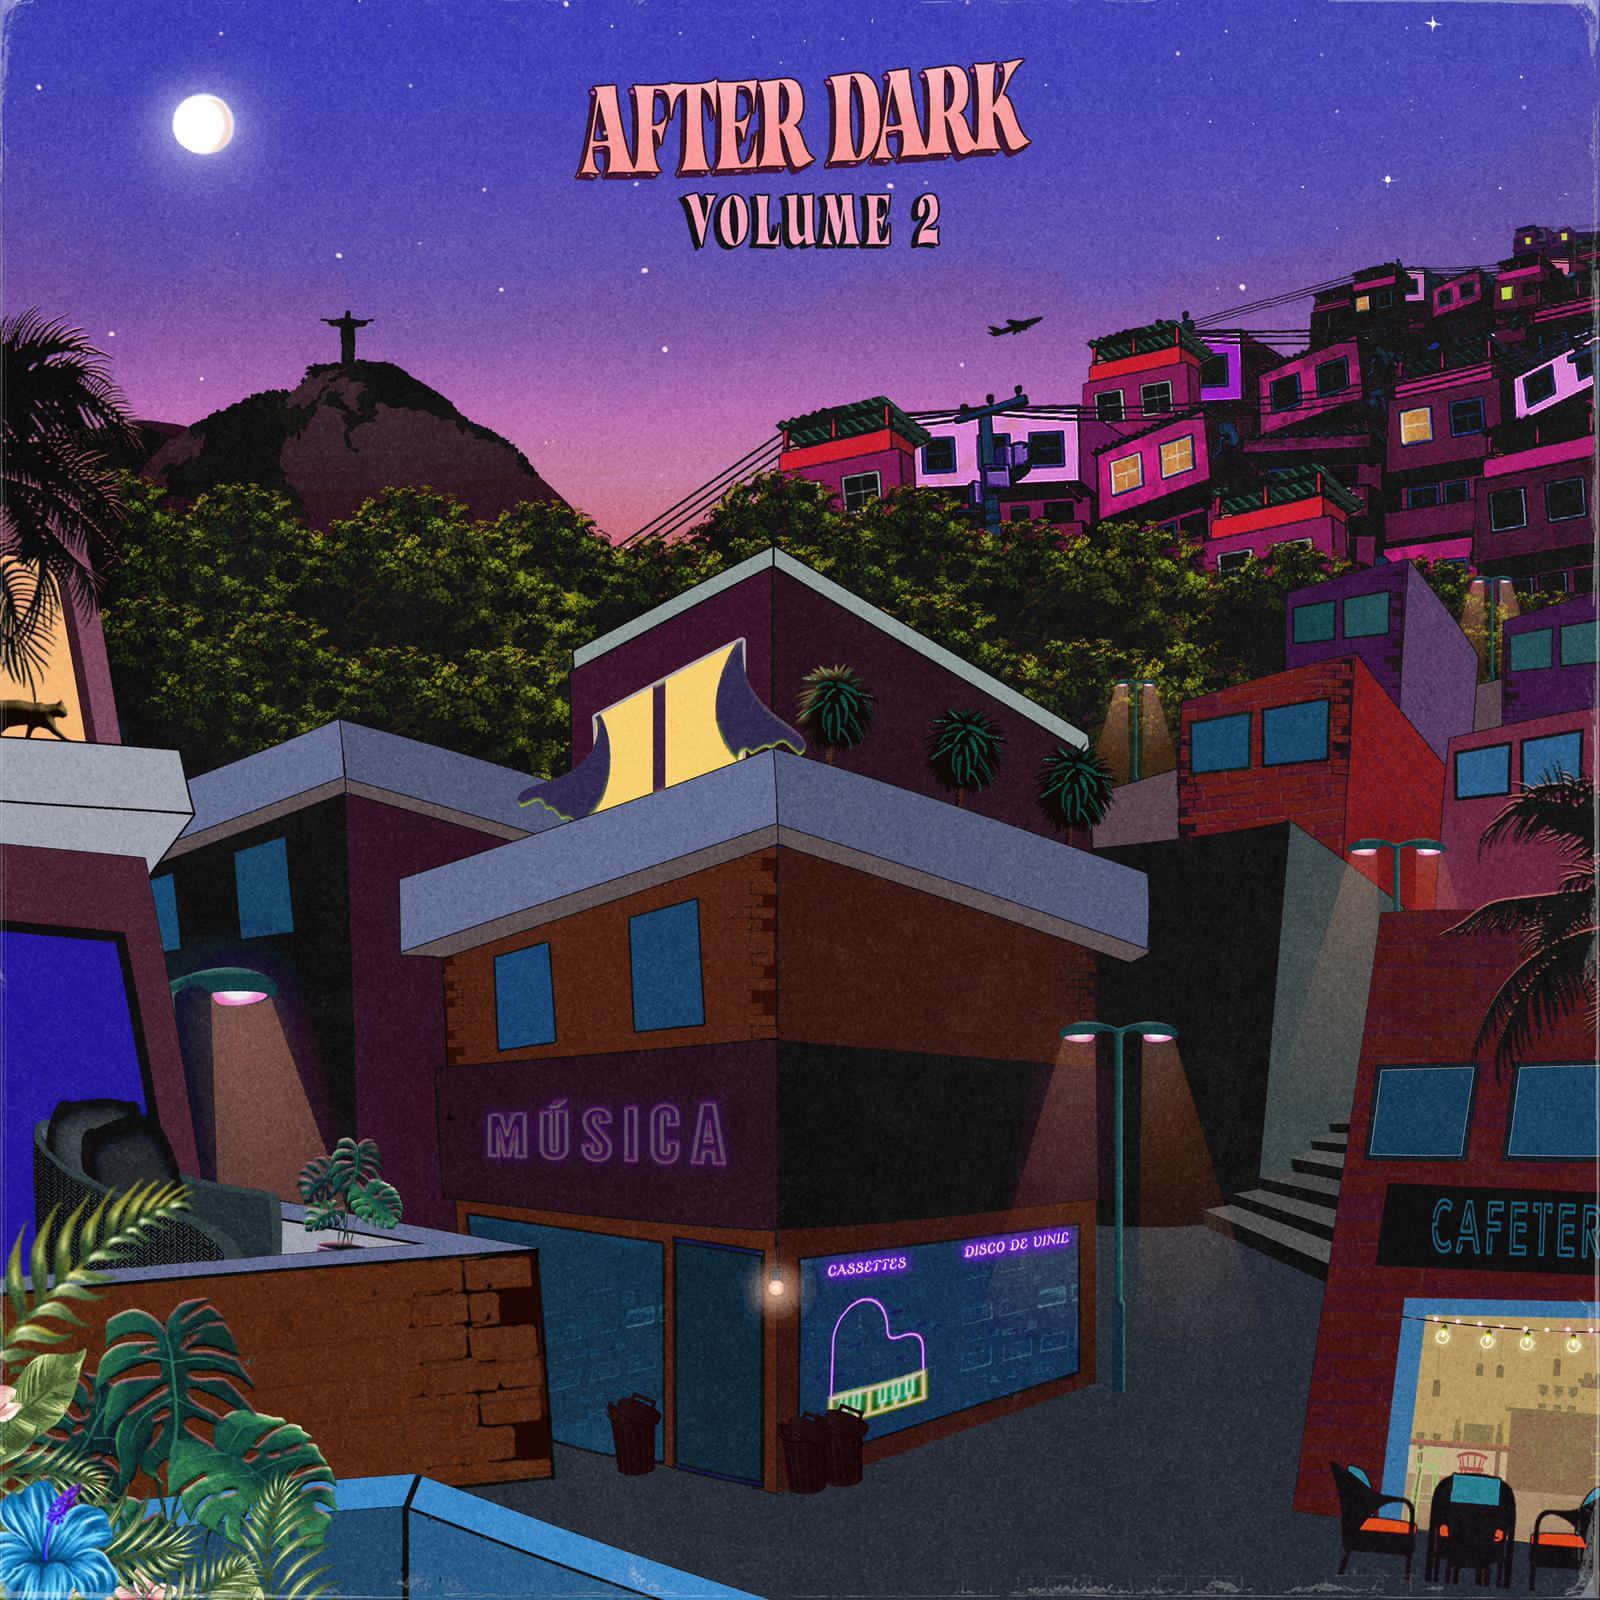 After Dark Volume 2 - The Sample Lab